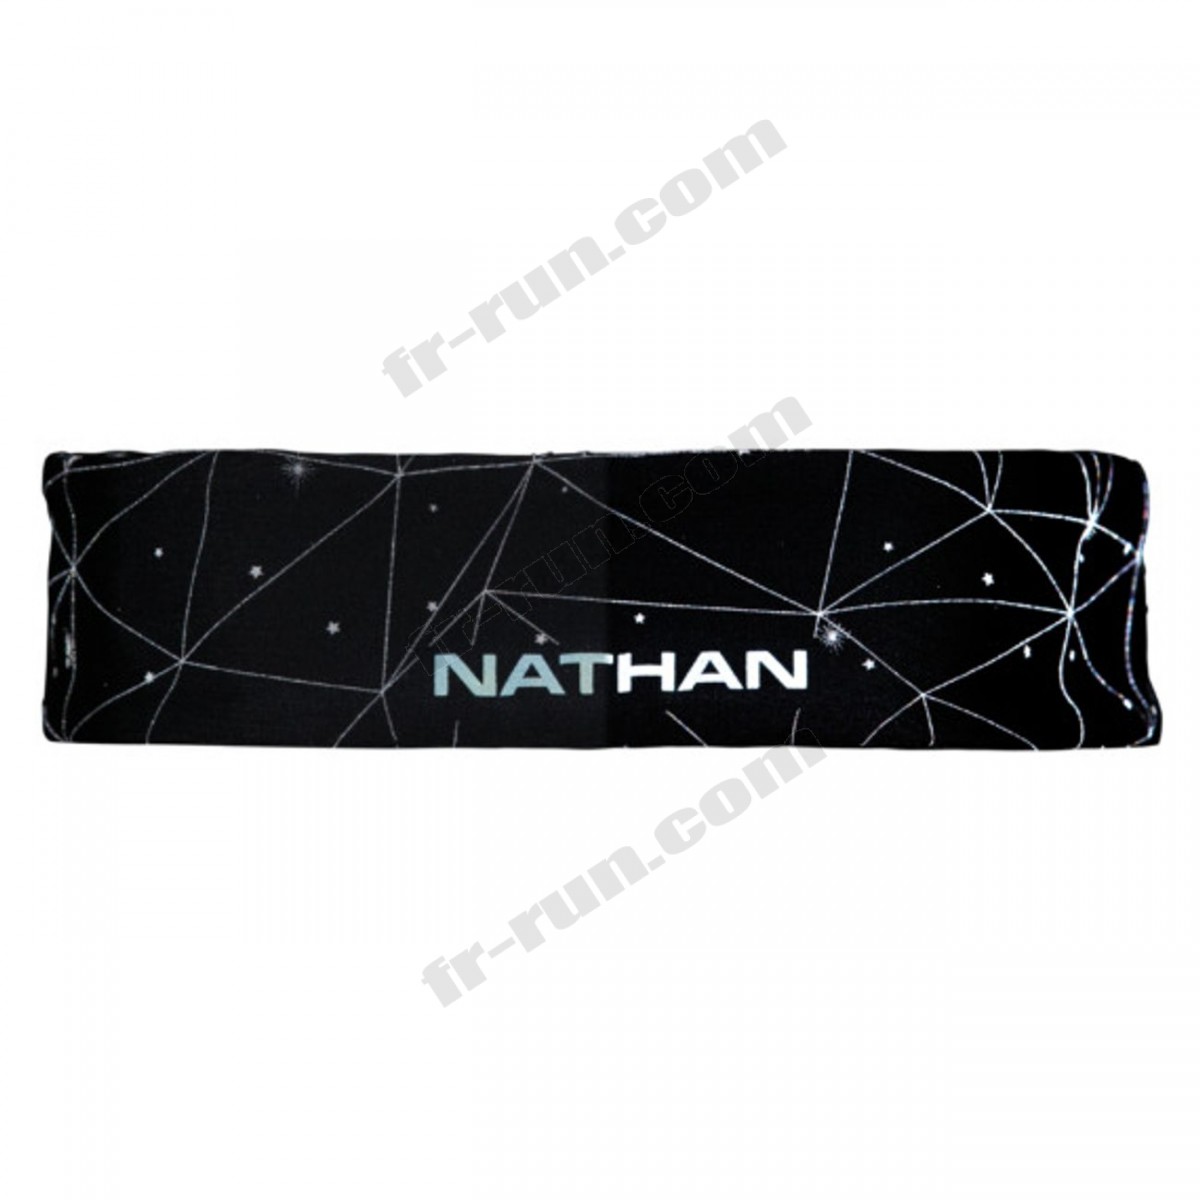 Nathan/Course à pied adulte NATHAN Bandeau Nathan HyperNight Reflective ◇◇◇ Pas Cher Du Tout - -0